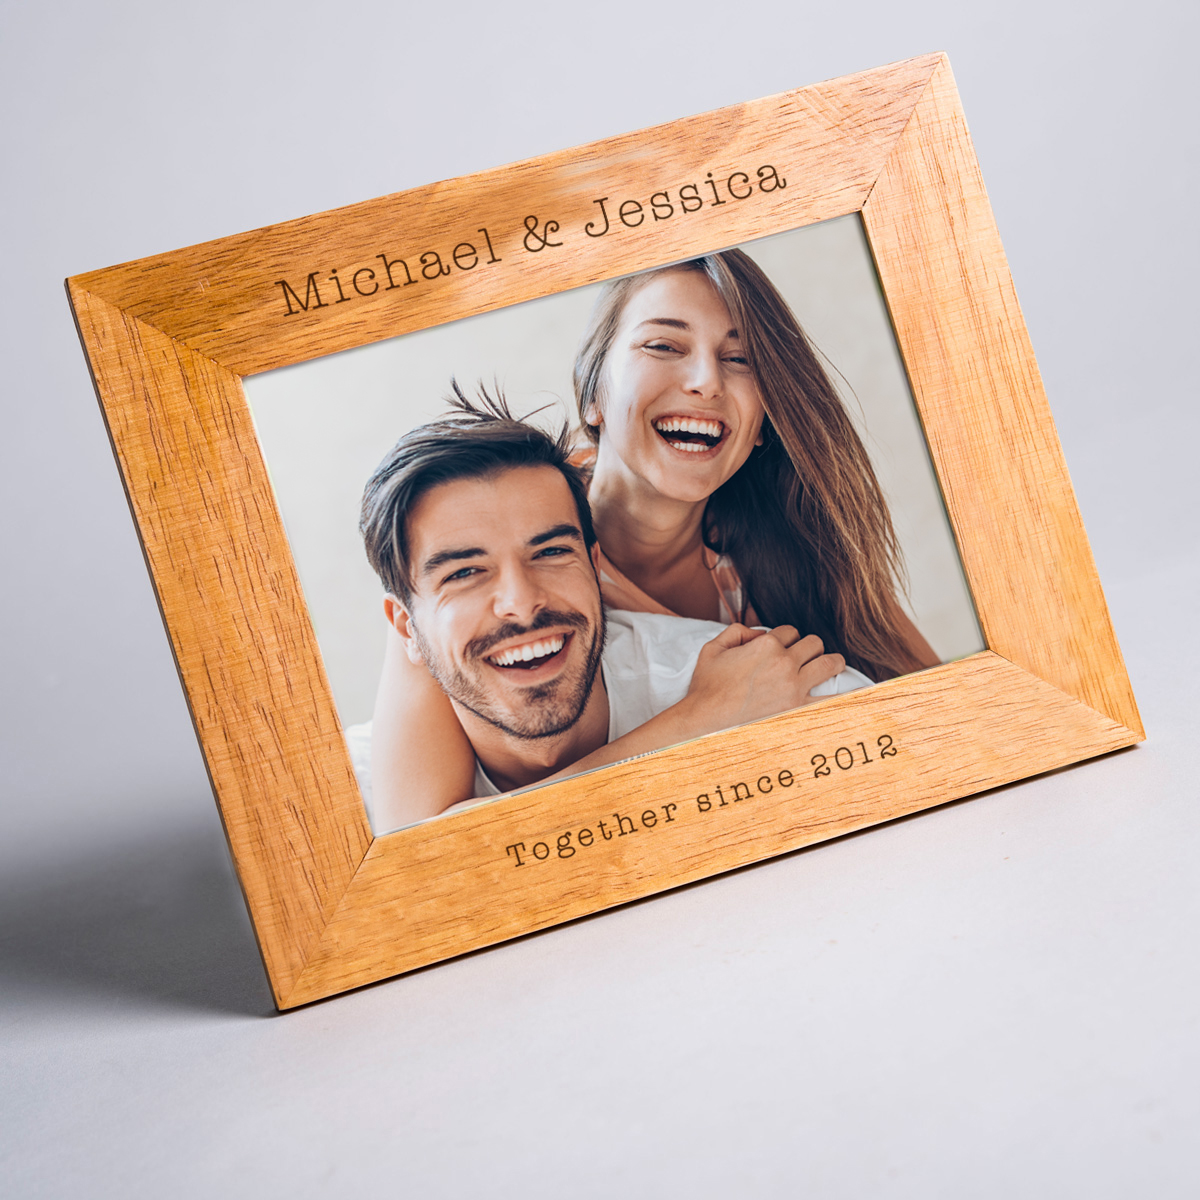 Engraved Wooden Photo Frame - Together Since